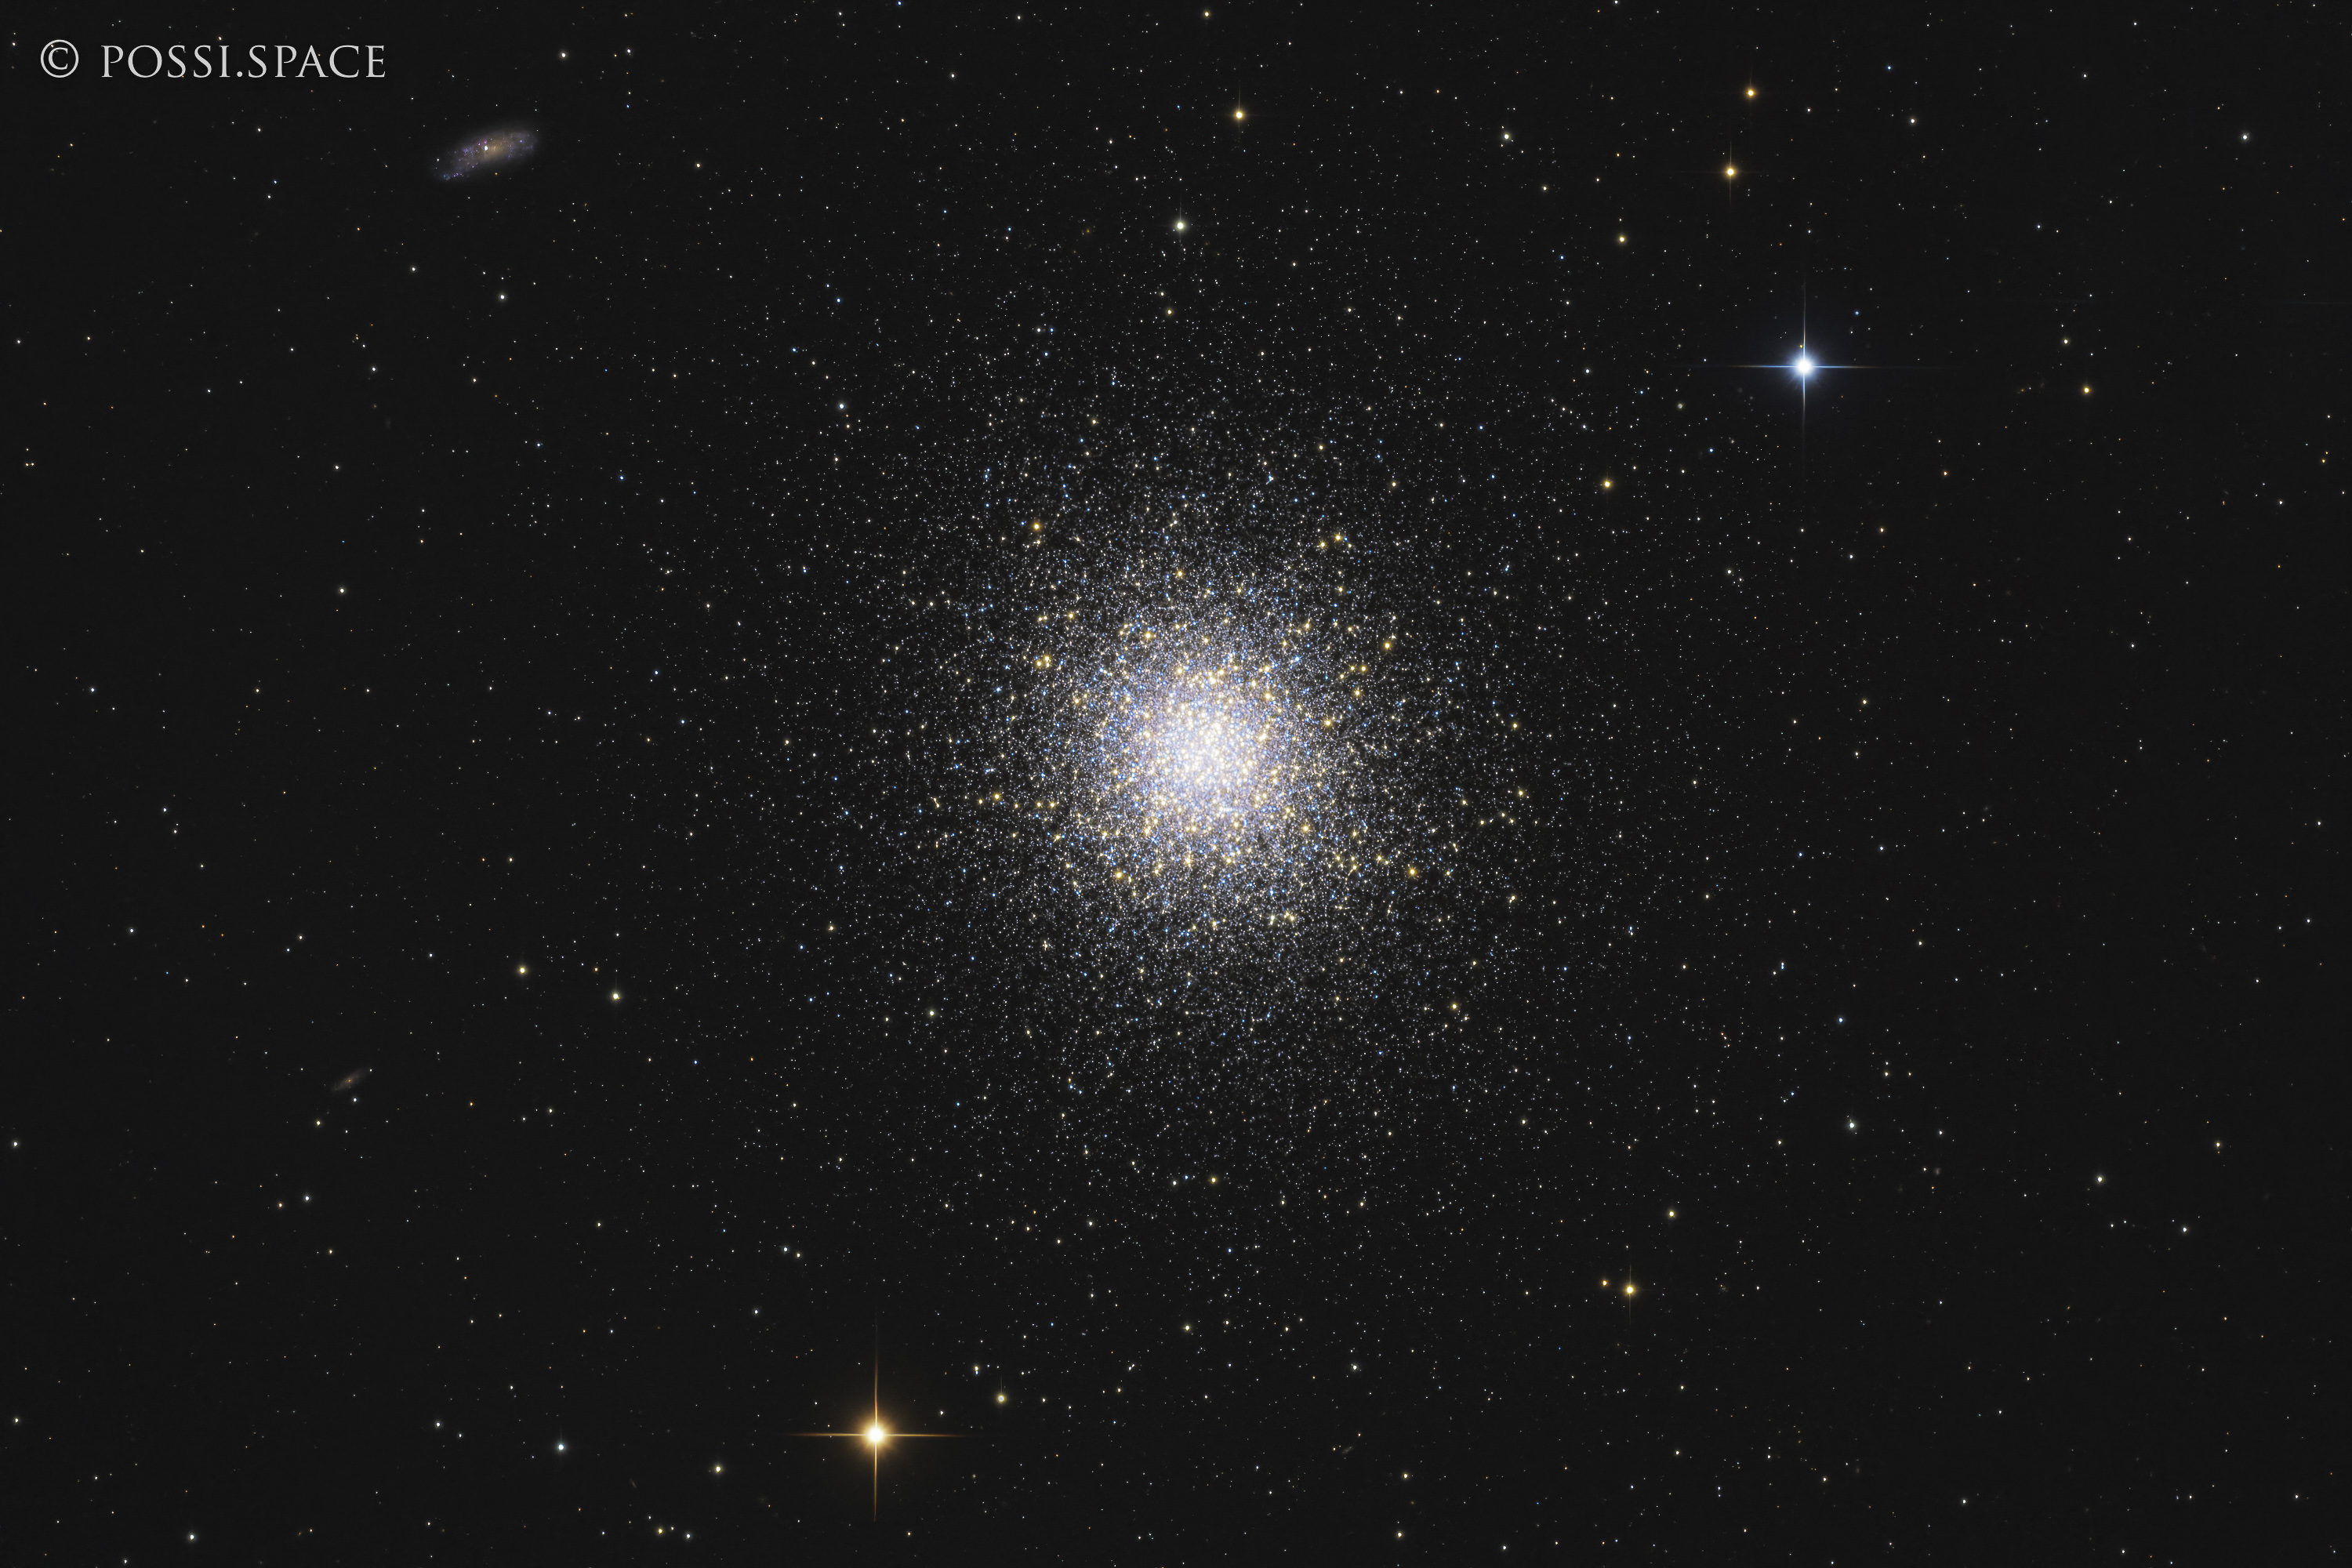 220325_m13_hercules_globular_cluster_-_cdk17_reduced.jpg